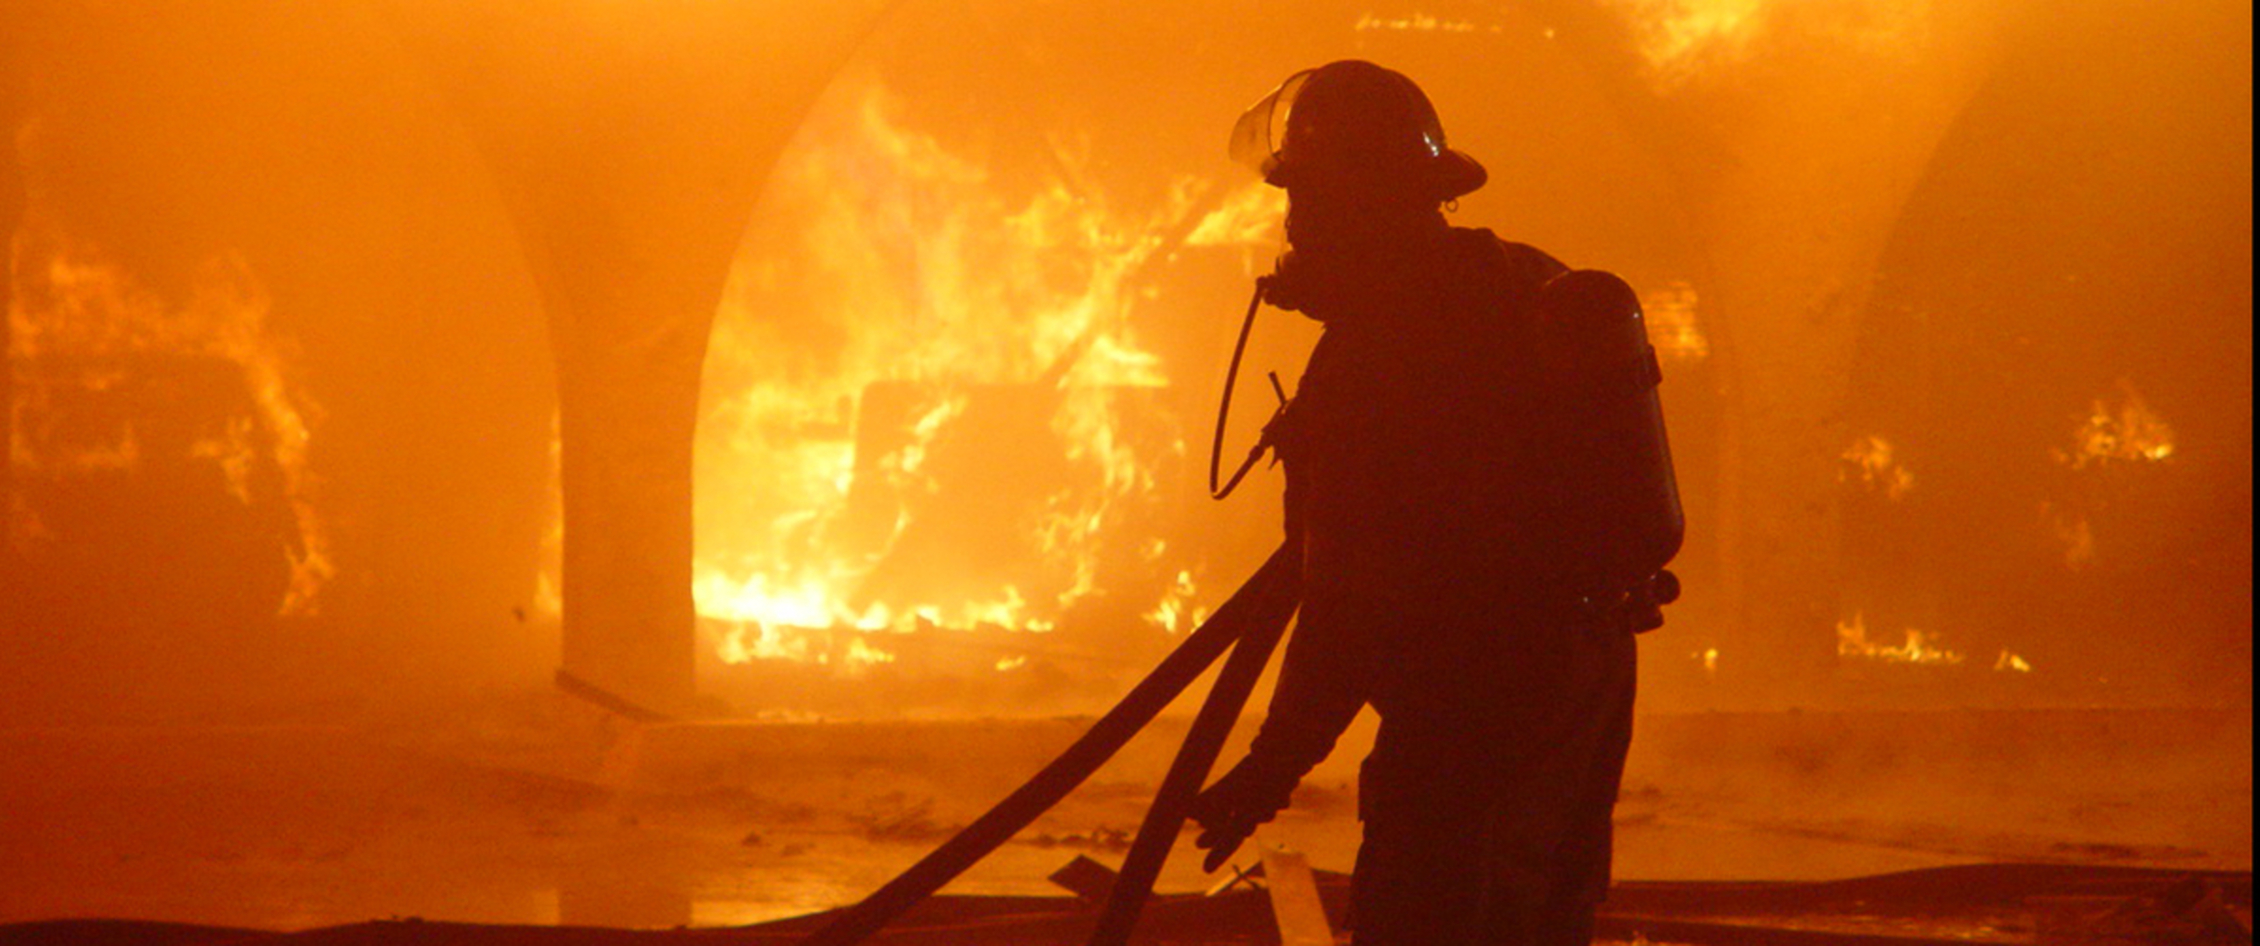 Fireman fighting a building fire.